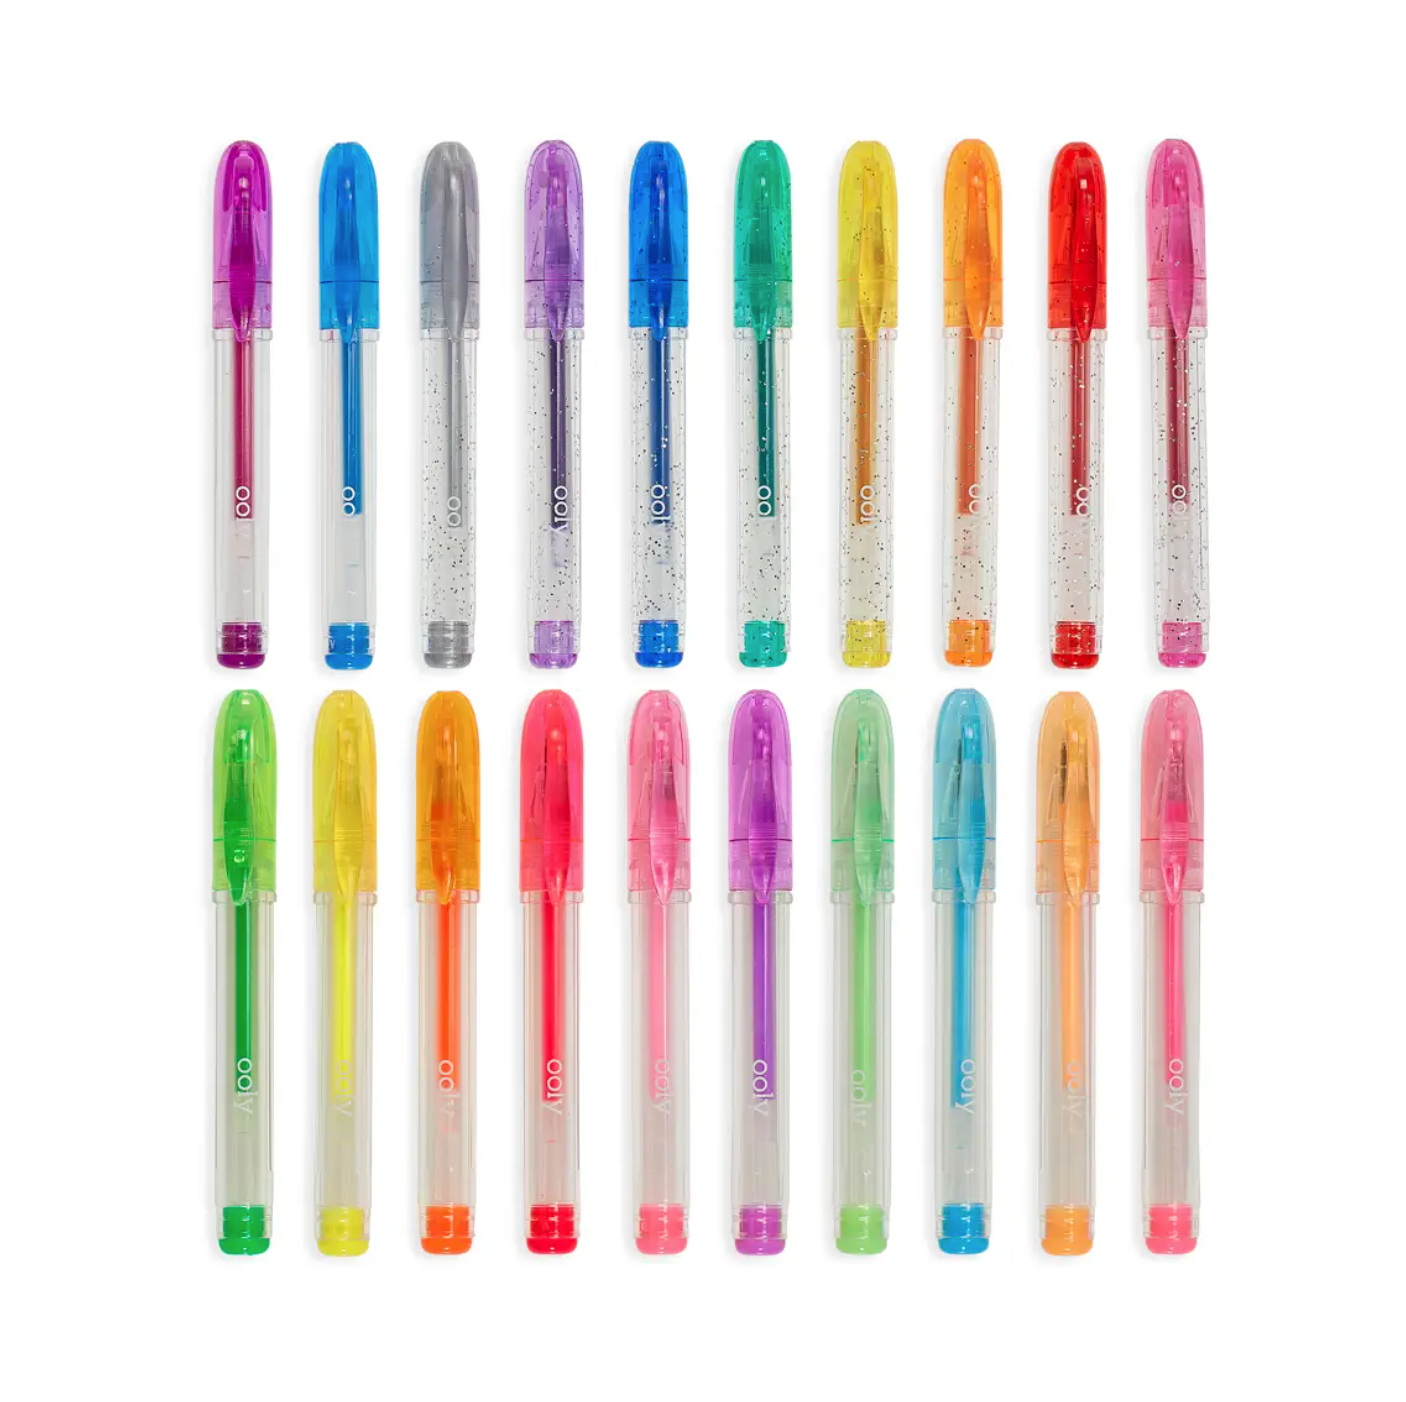 Mini Doodlers Fruity Scented Gel Pens - Set of 20